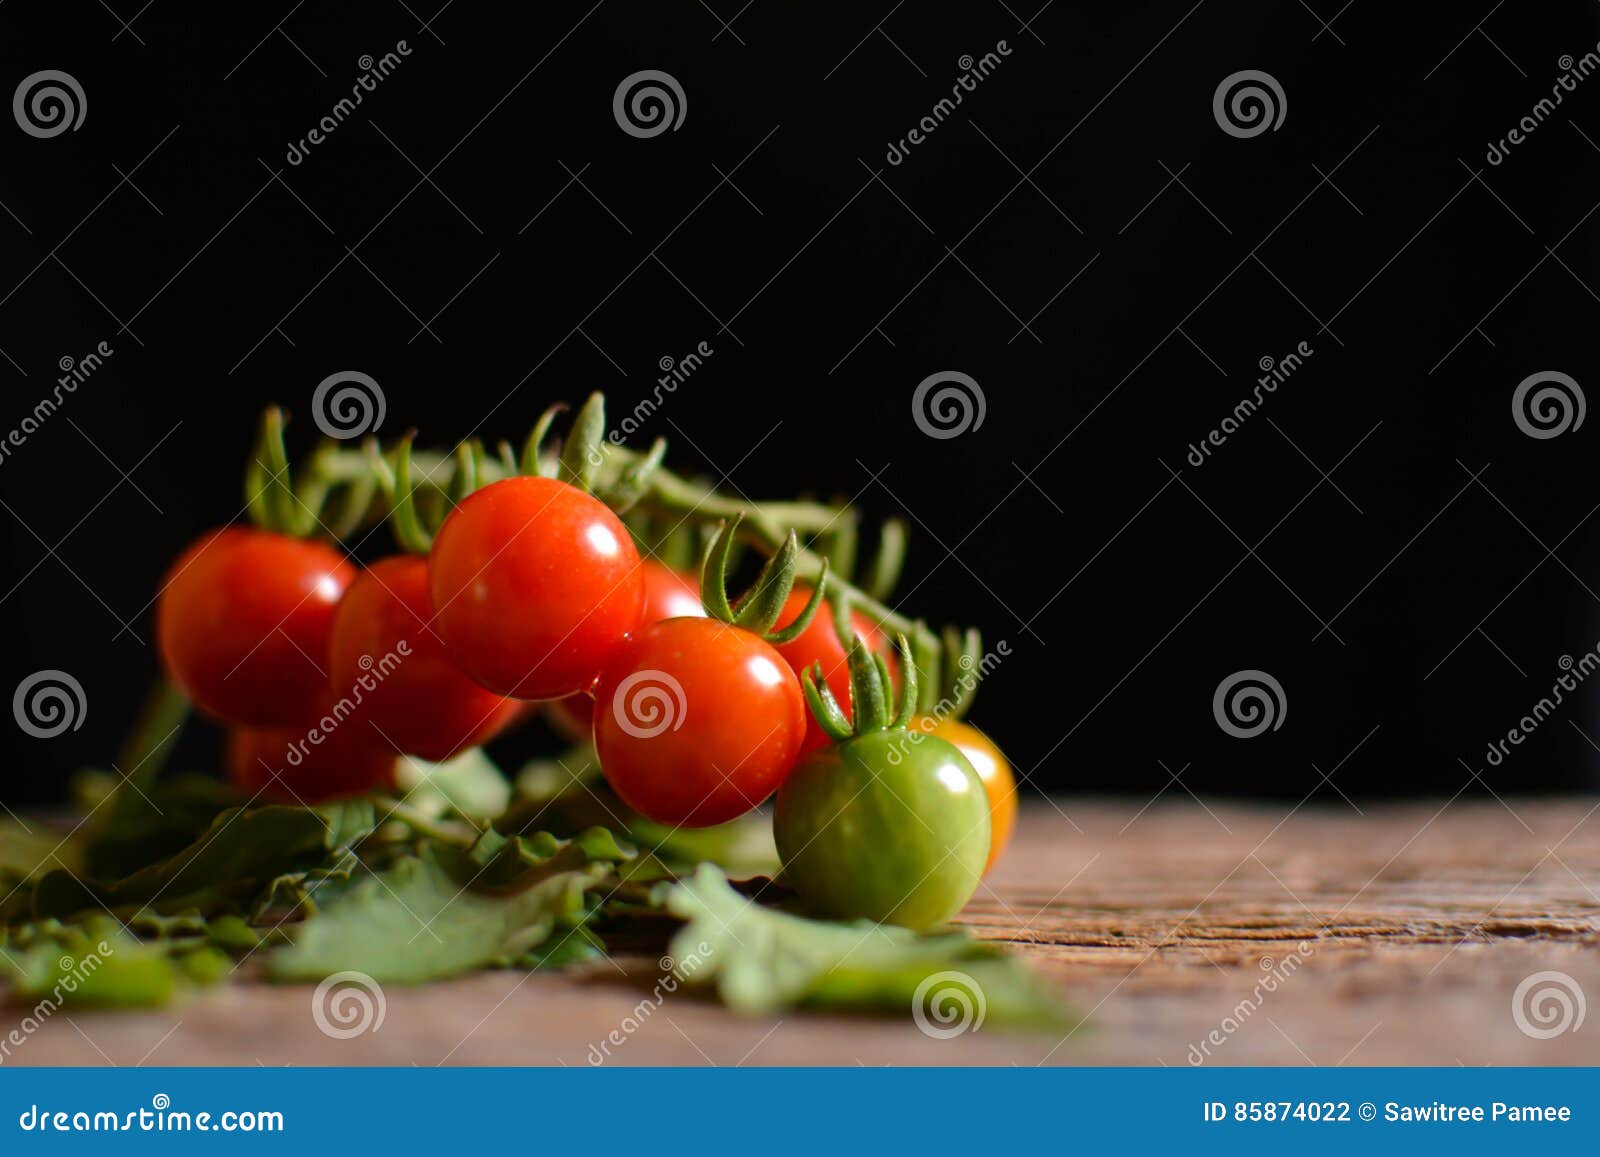 stil life group of tomato on old wood